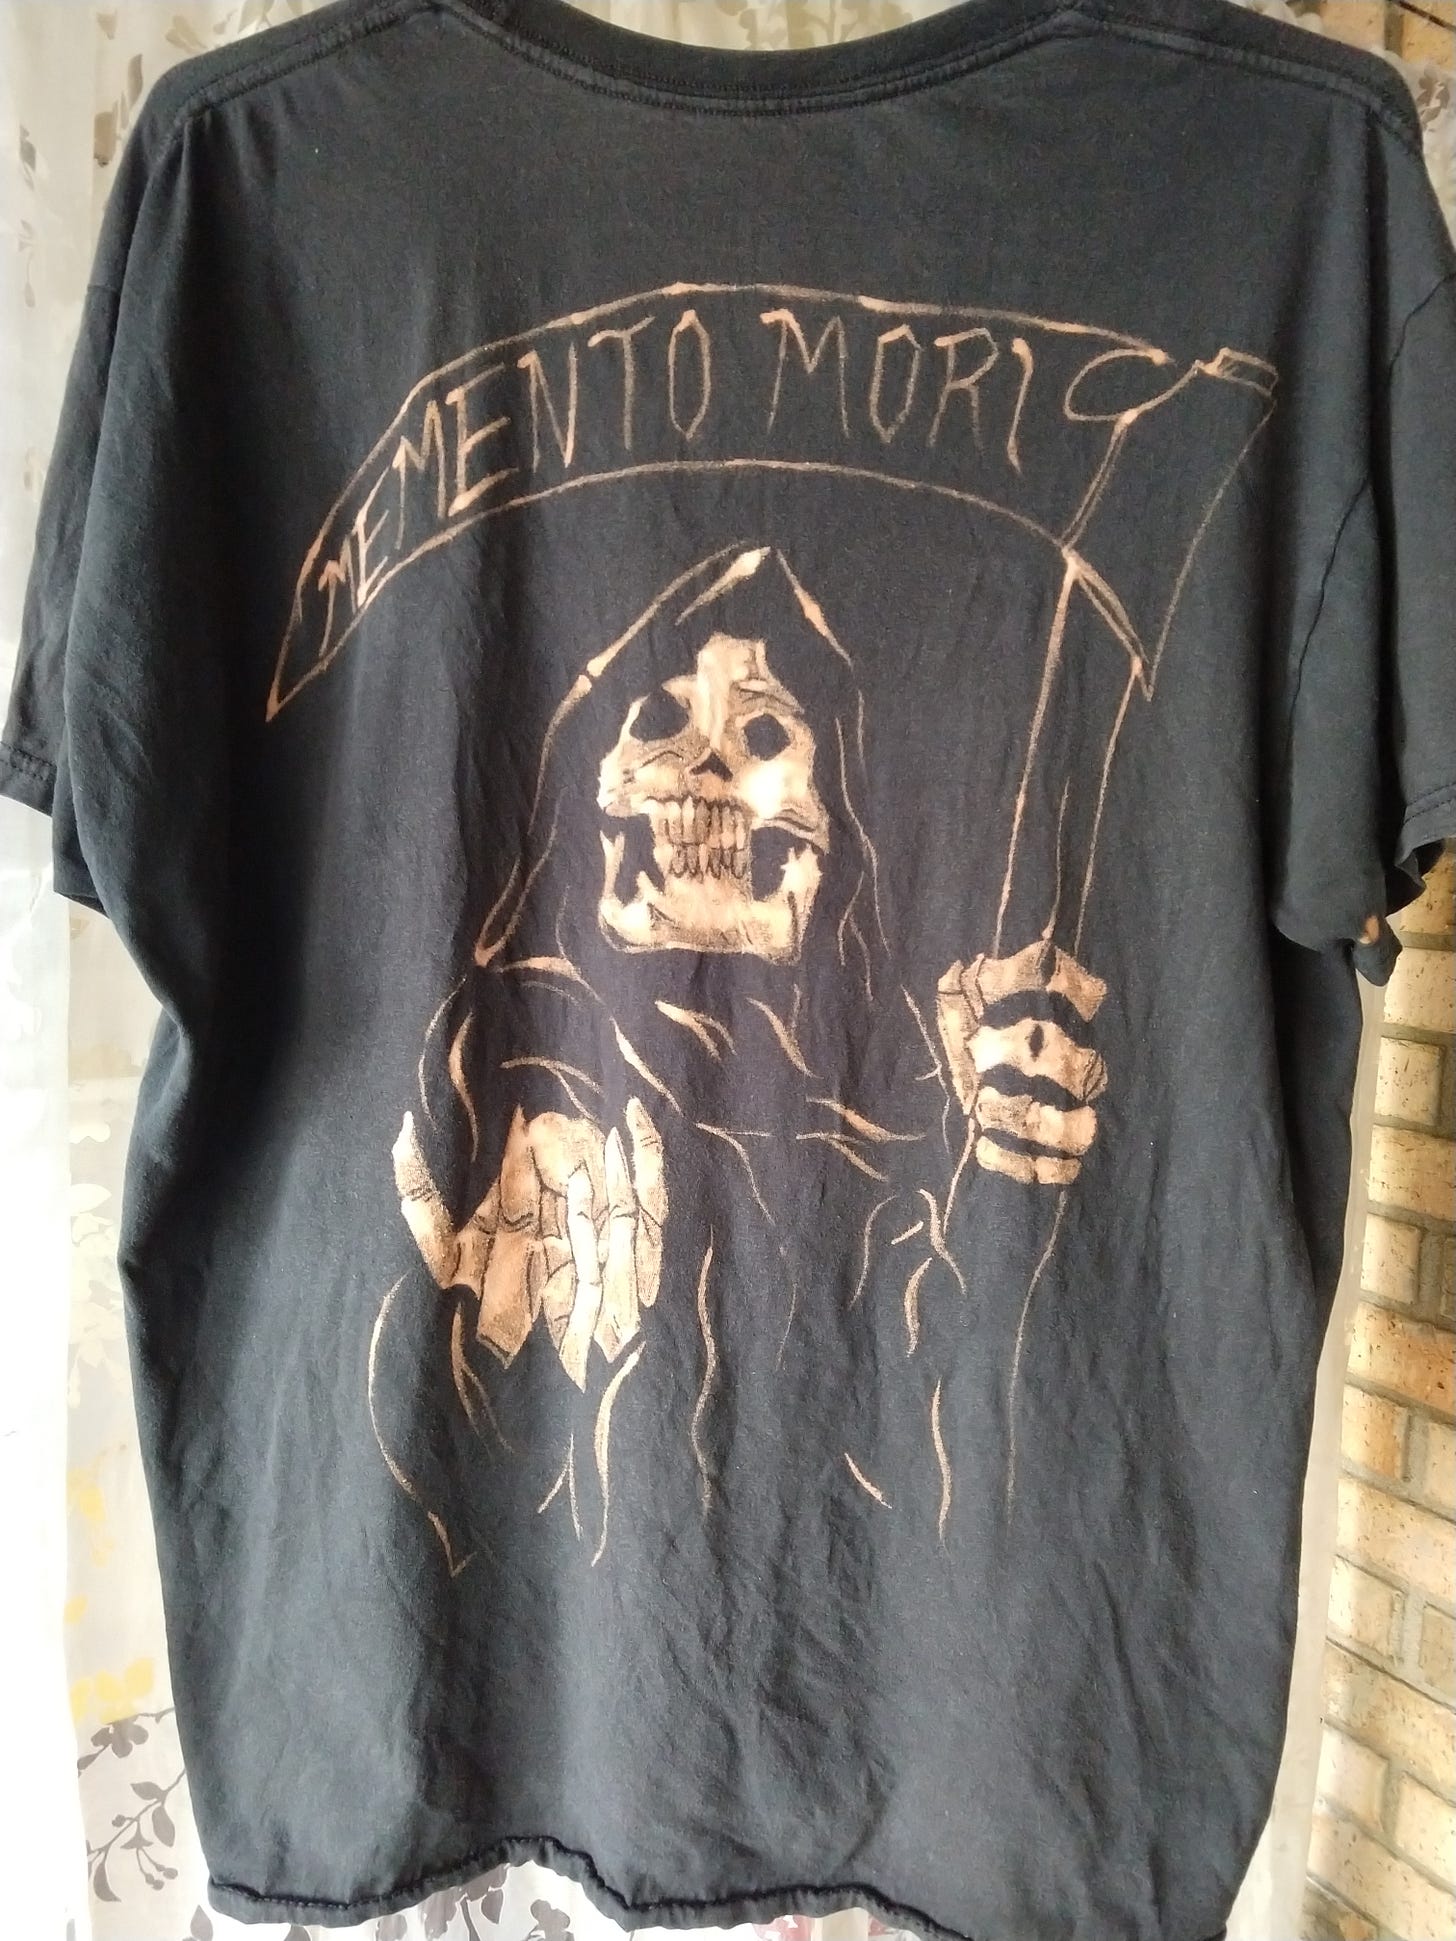 Grim Reaper with "Memento Mori" on the scythe